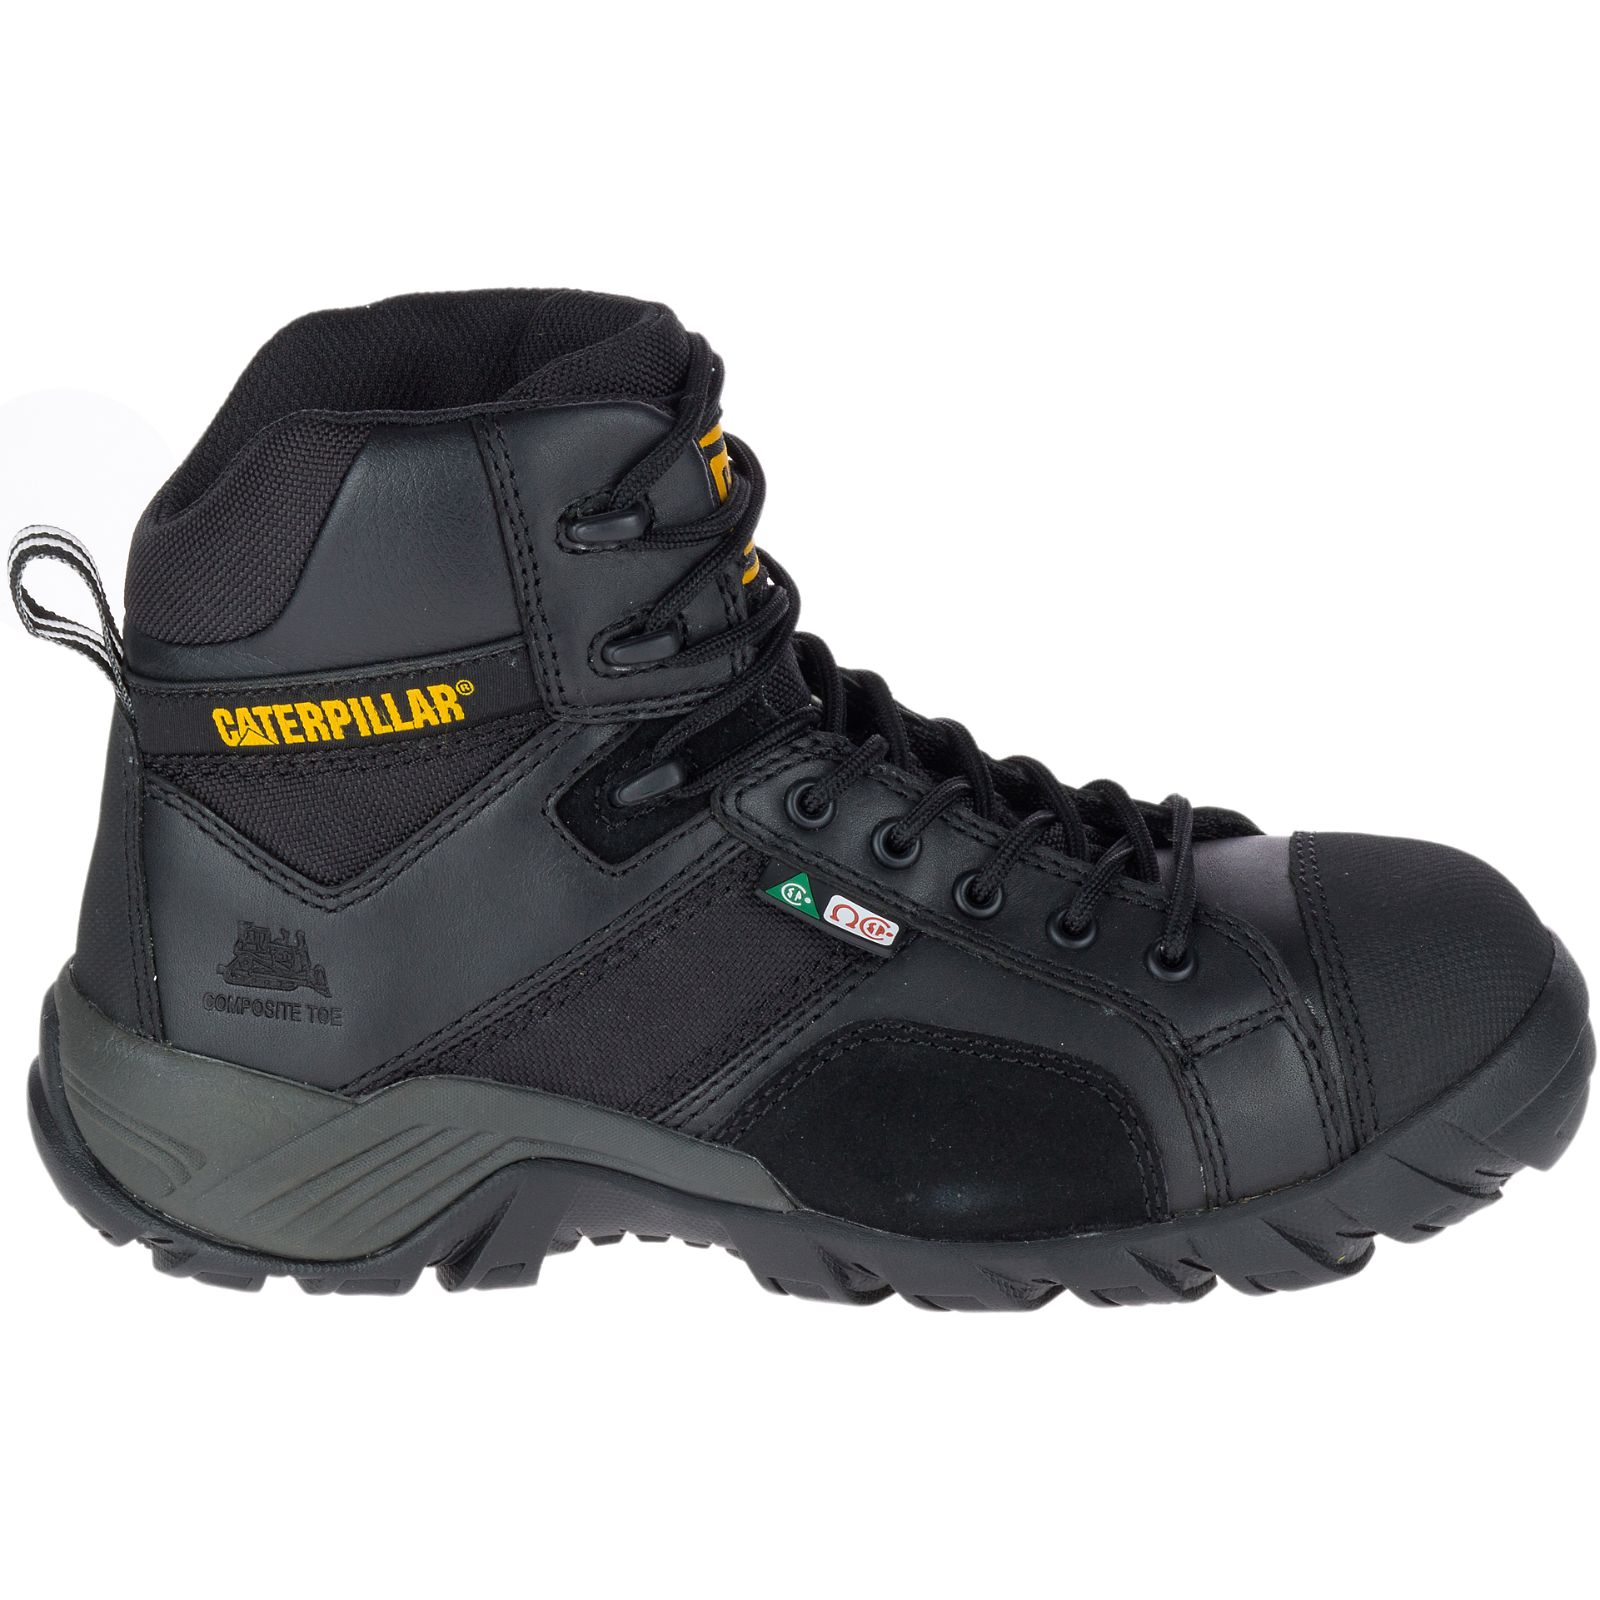 Caterpillar Argon Hi Composite Toe Csa Philippines - Womens Work Boots - Black 83572STDV